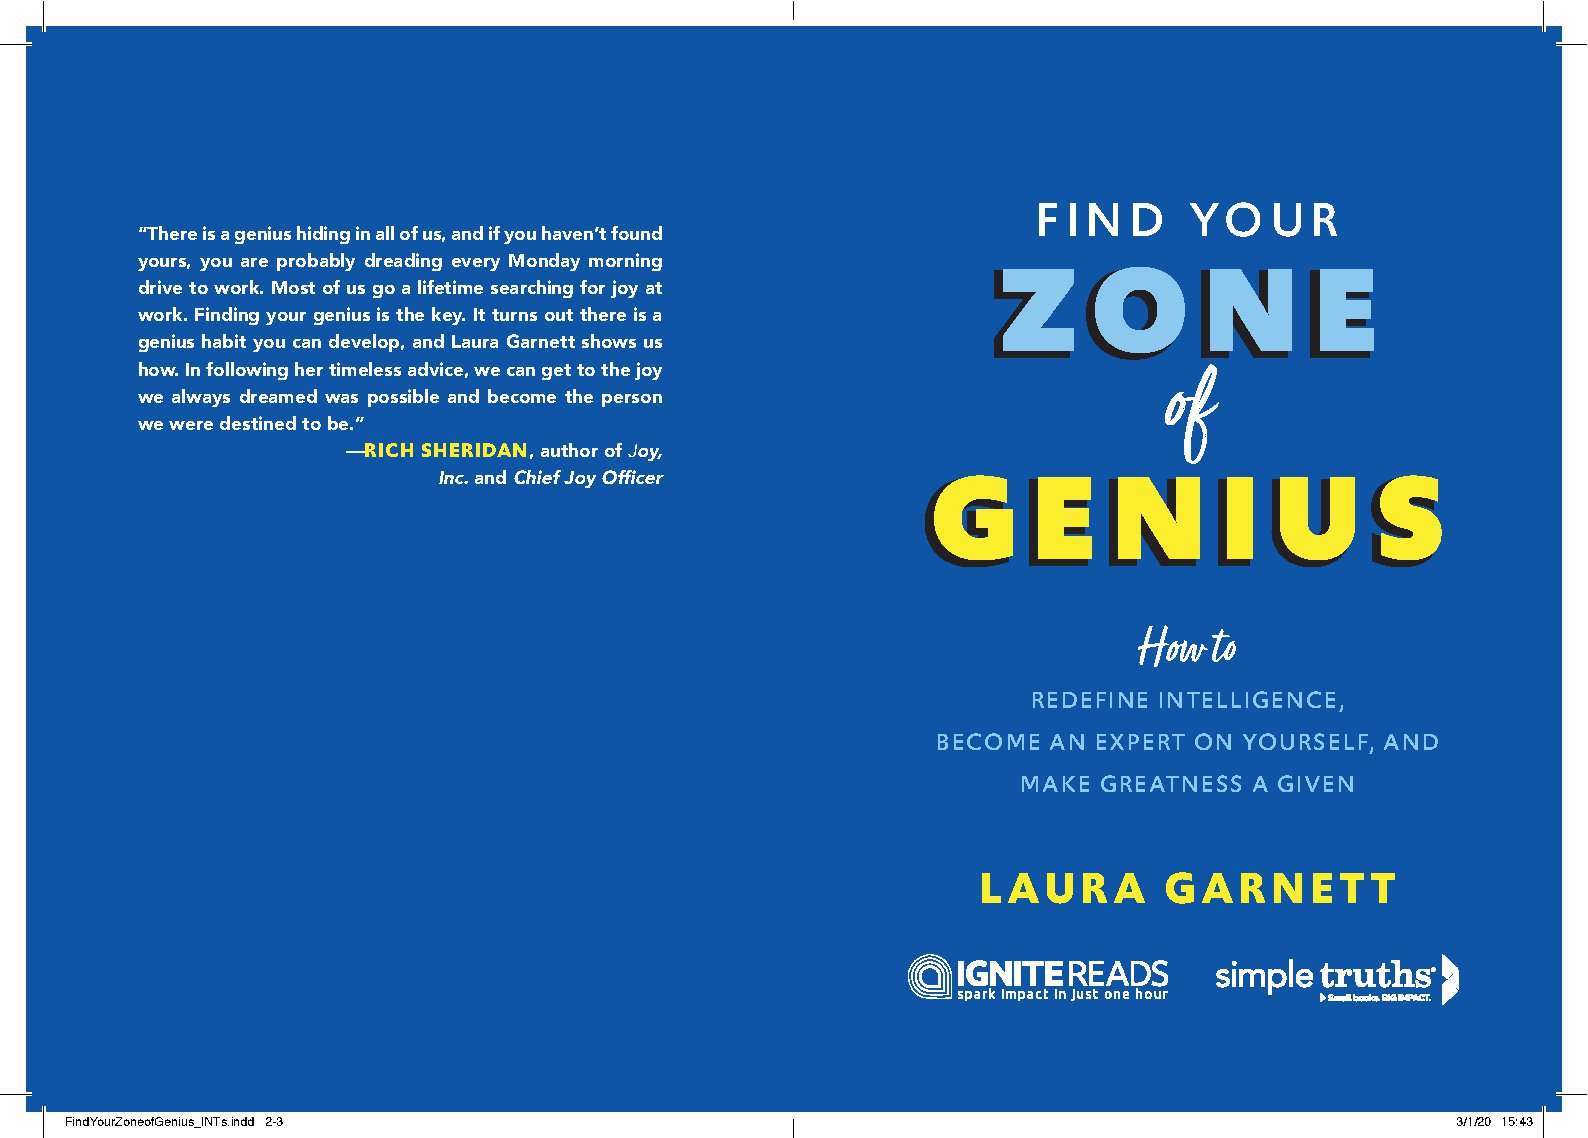 Find Your Zone of Genius